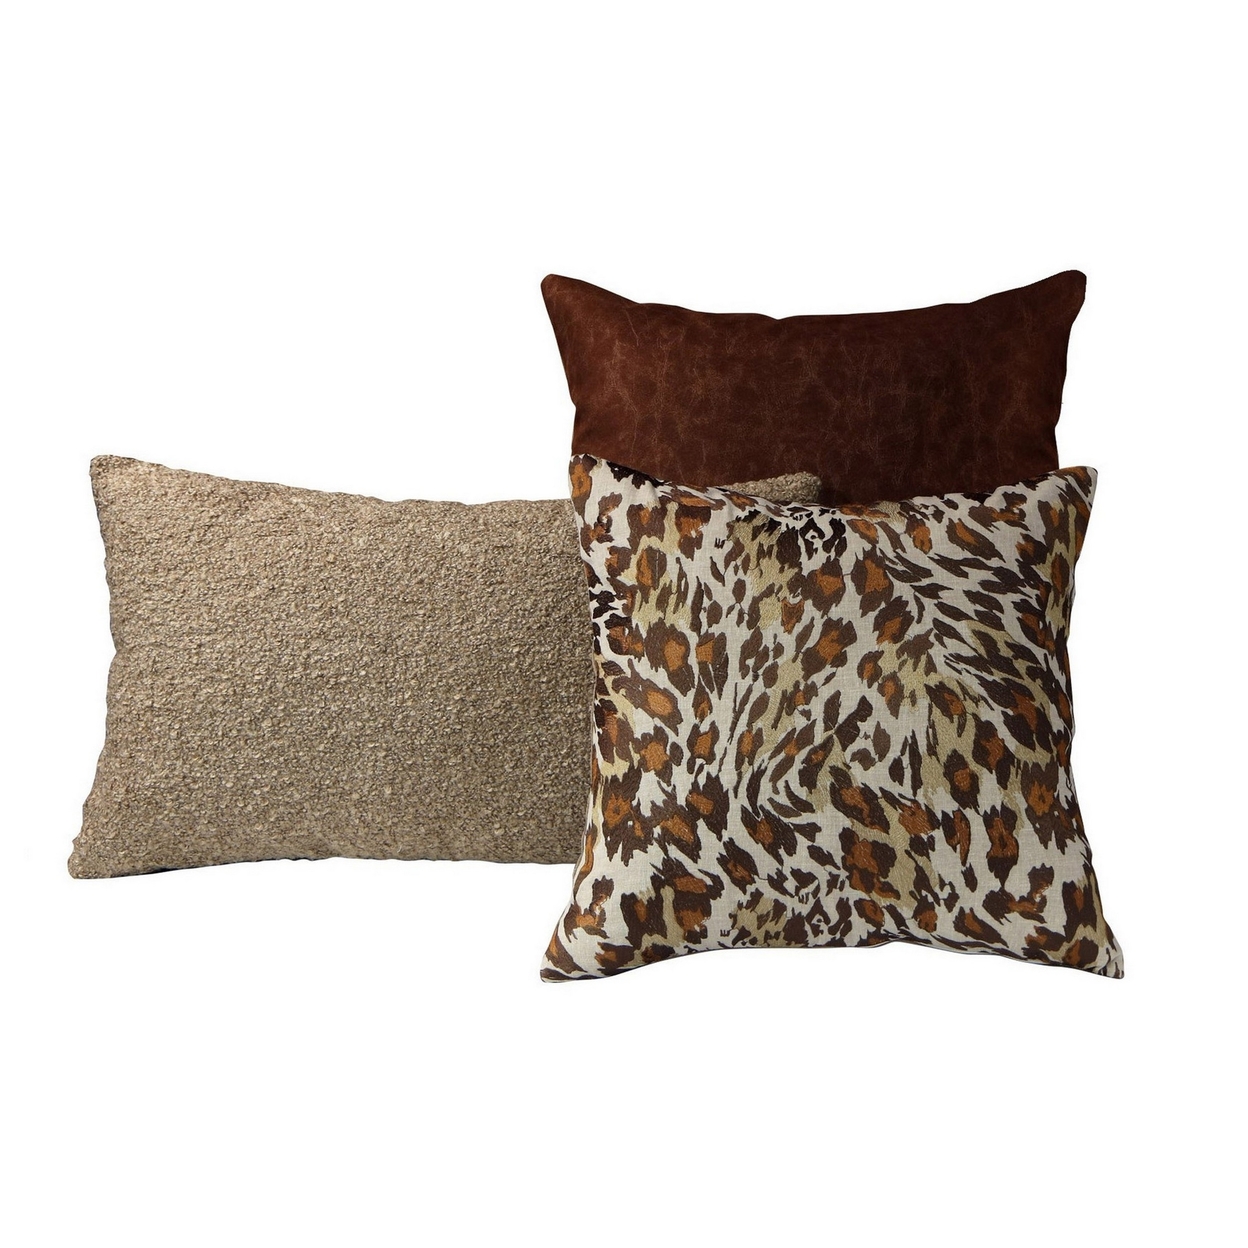 3 Modern Accent Throw Pillows, Animal Print, Sherpa Boucle, Brown, Beige - Saltoro Sherpi